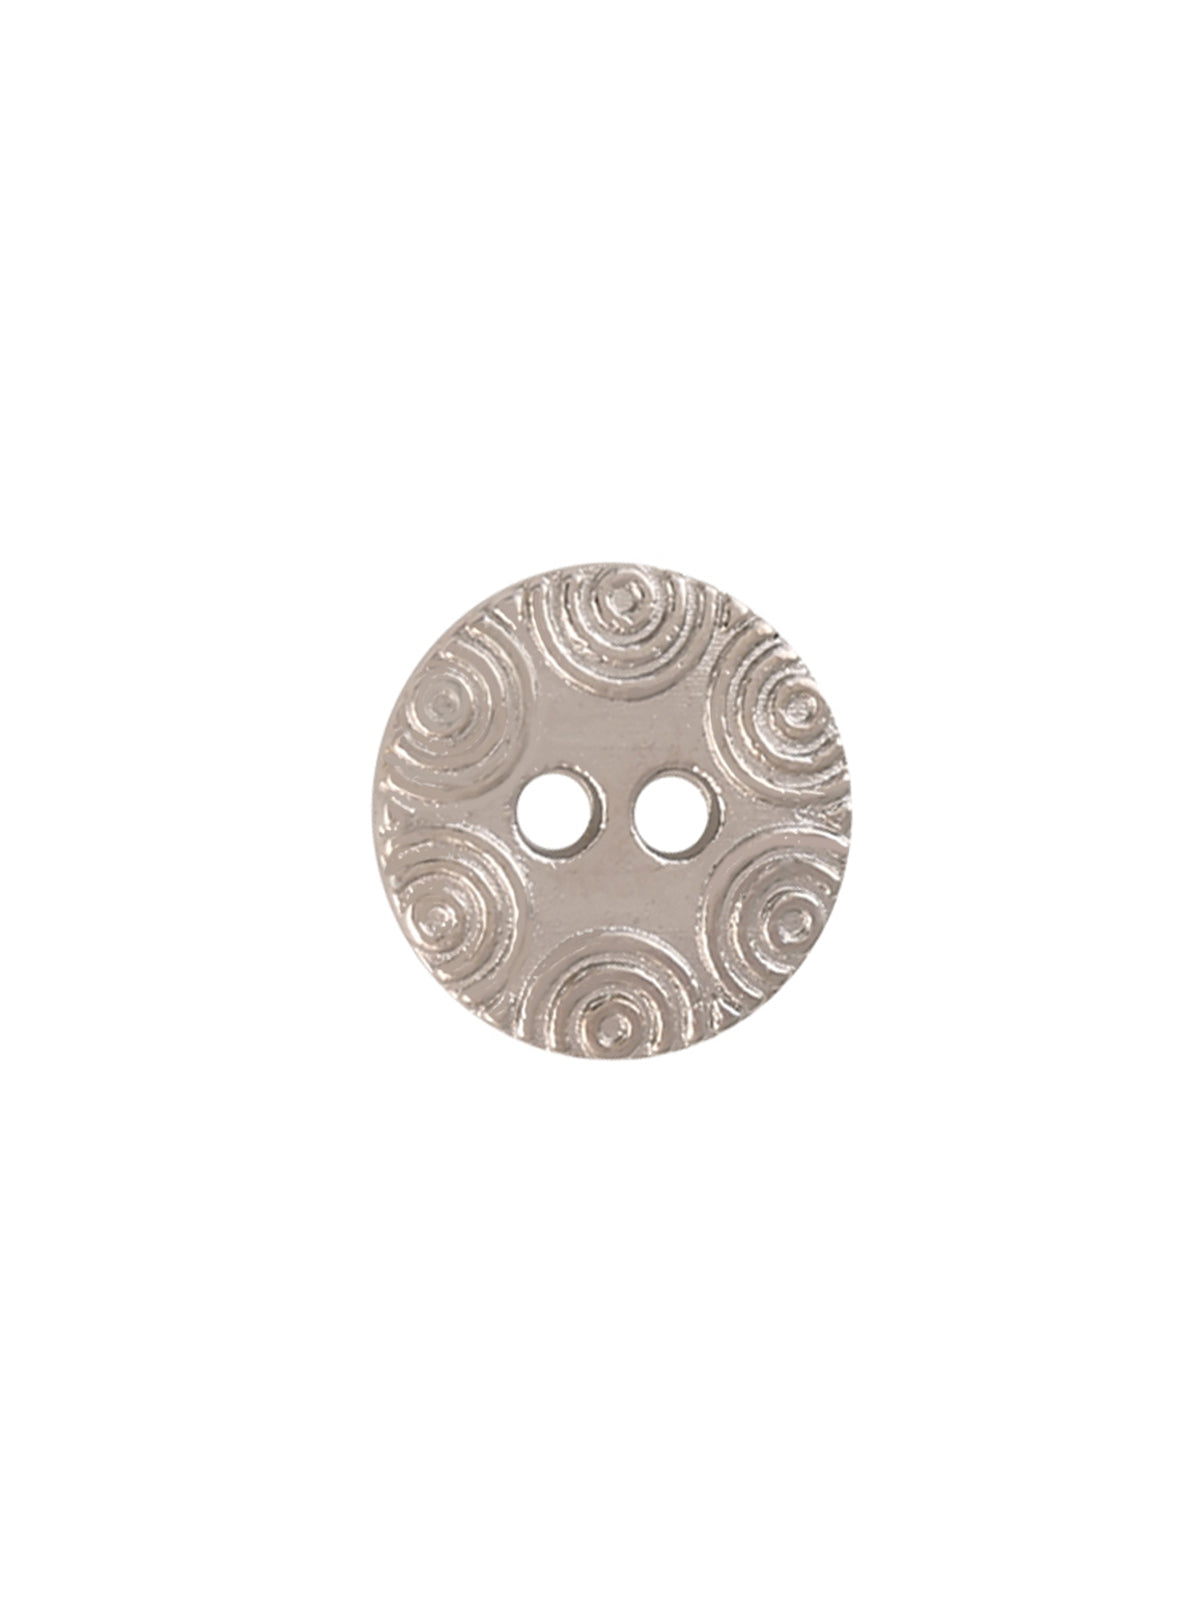 Decorative Round Shape 2-Hole Silver Color Metal Button